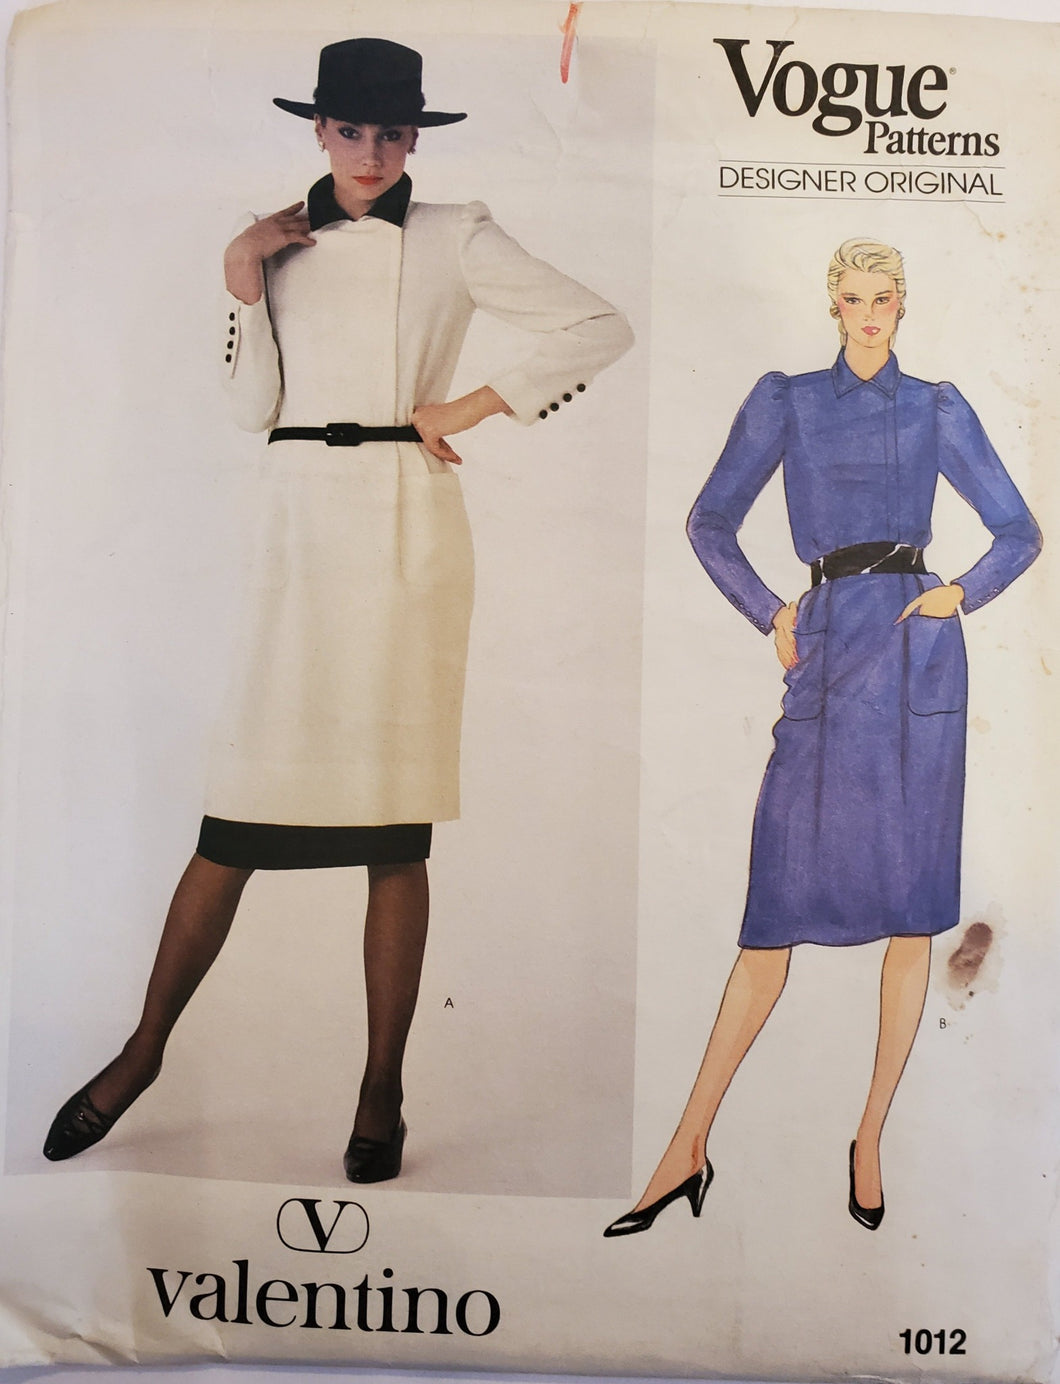 Vogue Pattern 1012, Valentino, Dress Size 10, Vintage